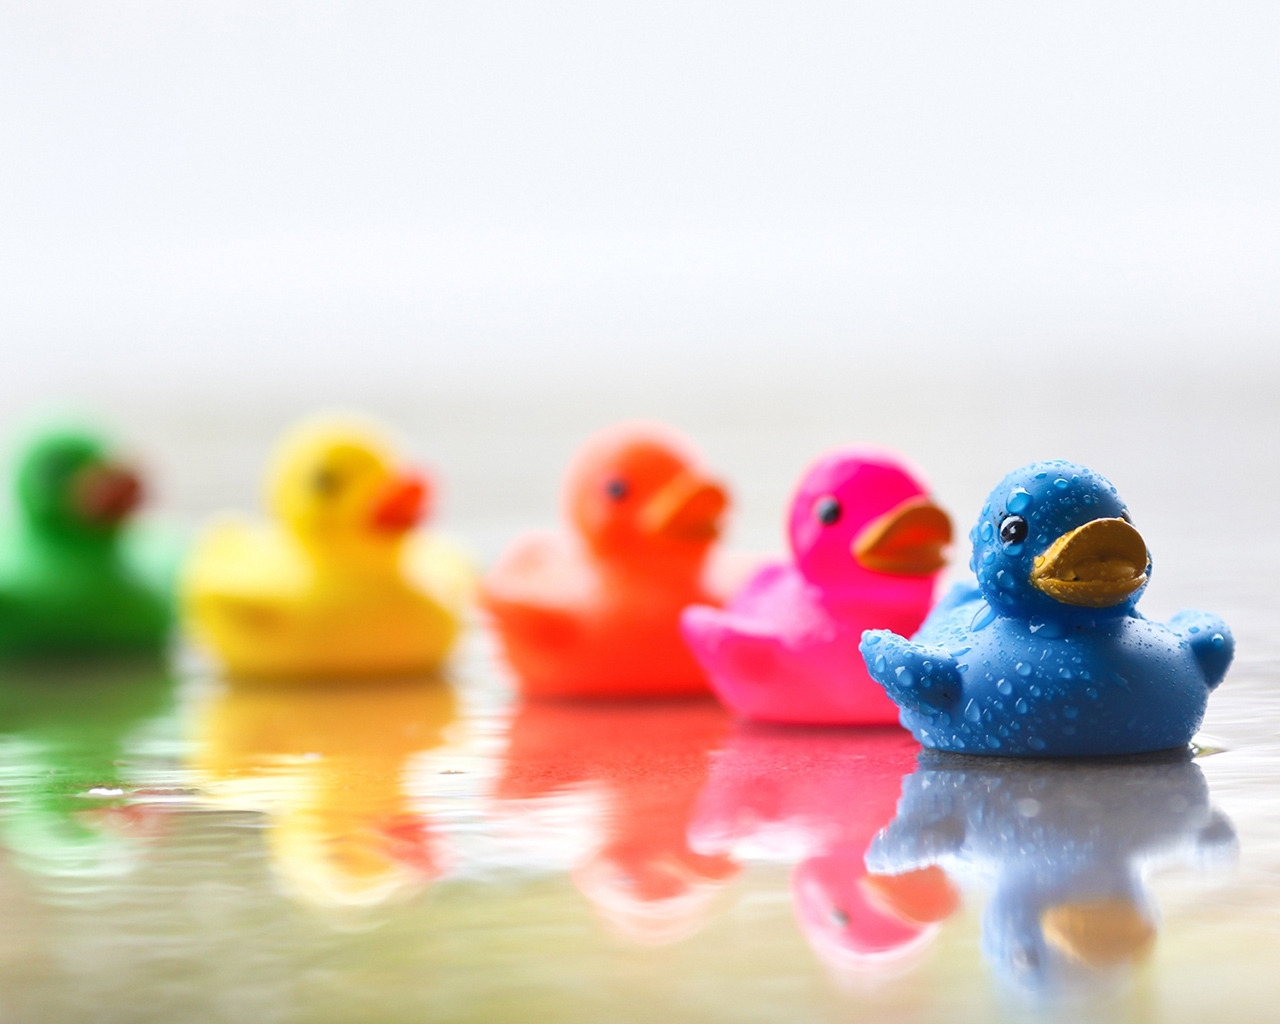 Cute Colourful Rubber Ducks for 1280 x 1024 resolution